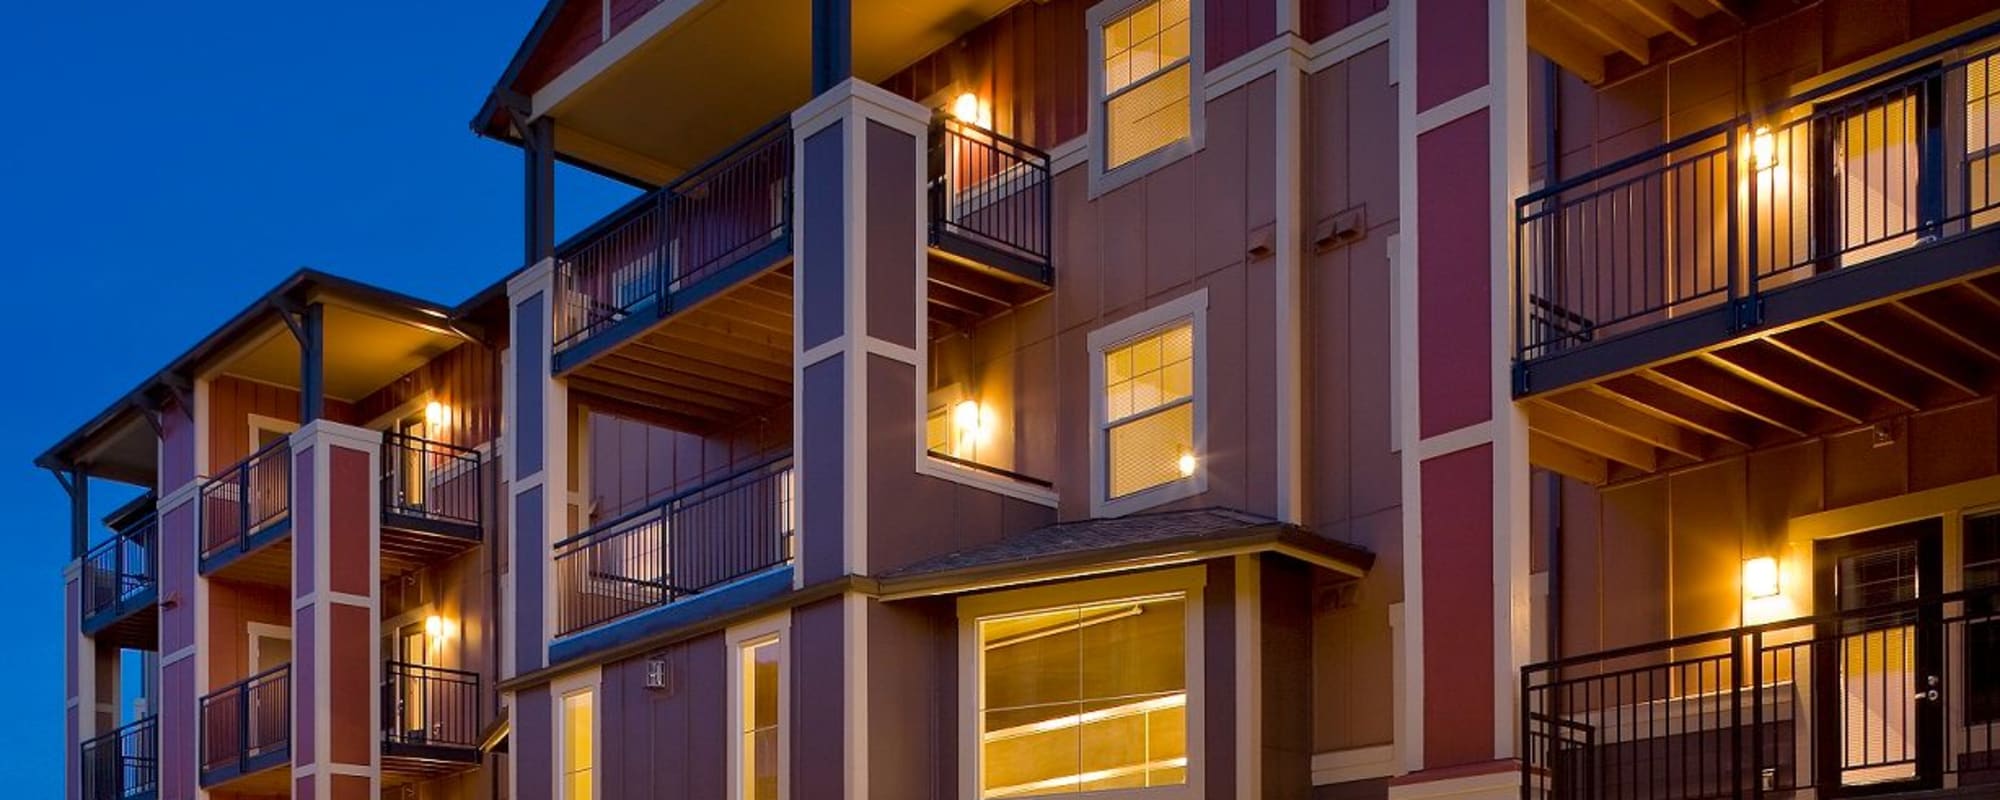 Moonlit apartments at The Springs at Tanasbourne in Hillsboro, Oregon